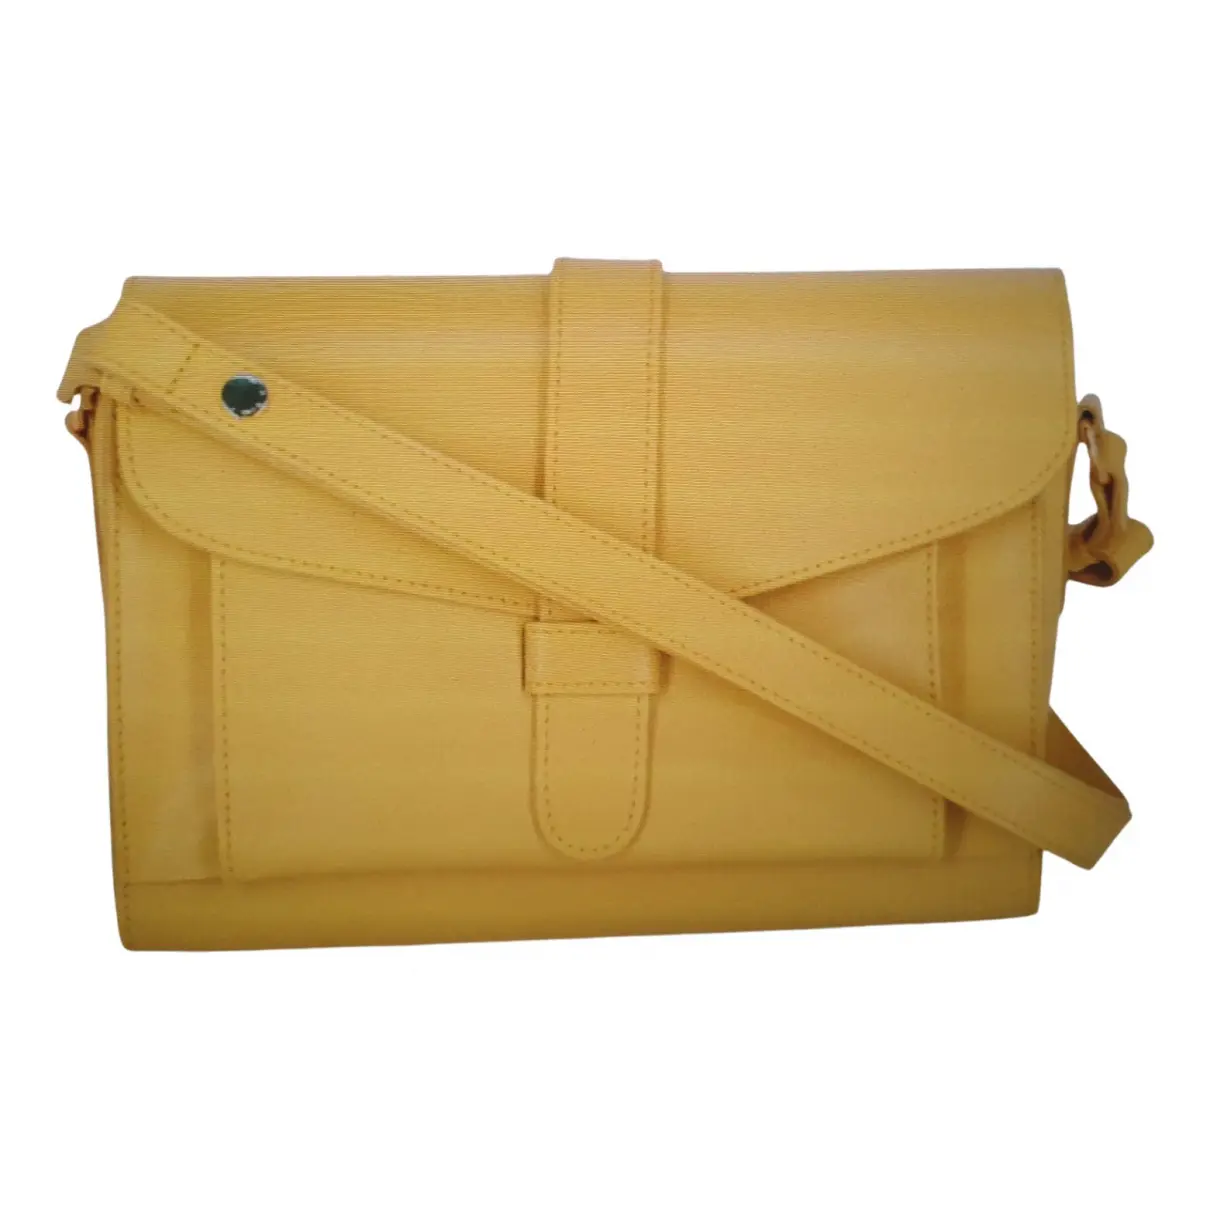 Tuk leather handbag Marni